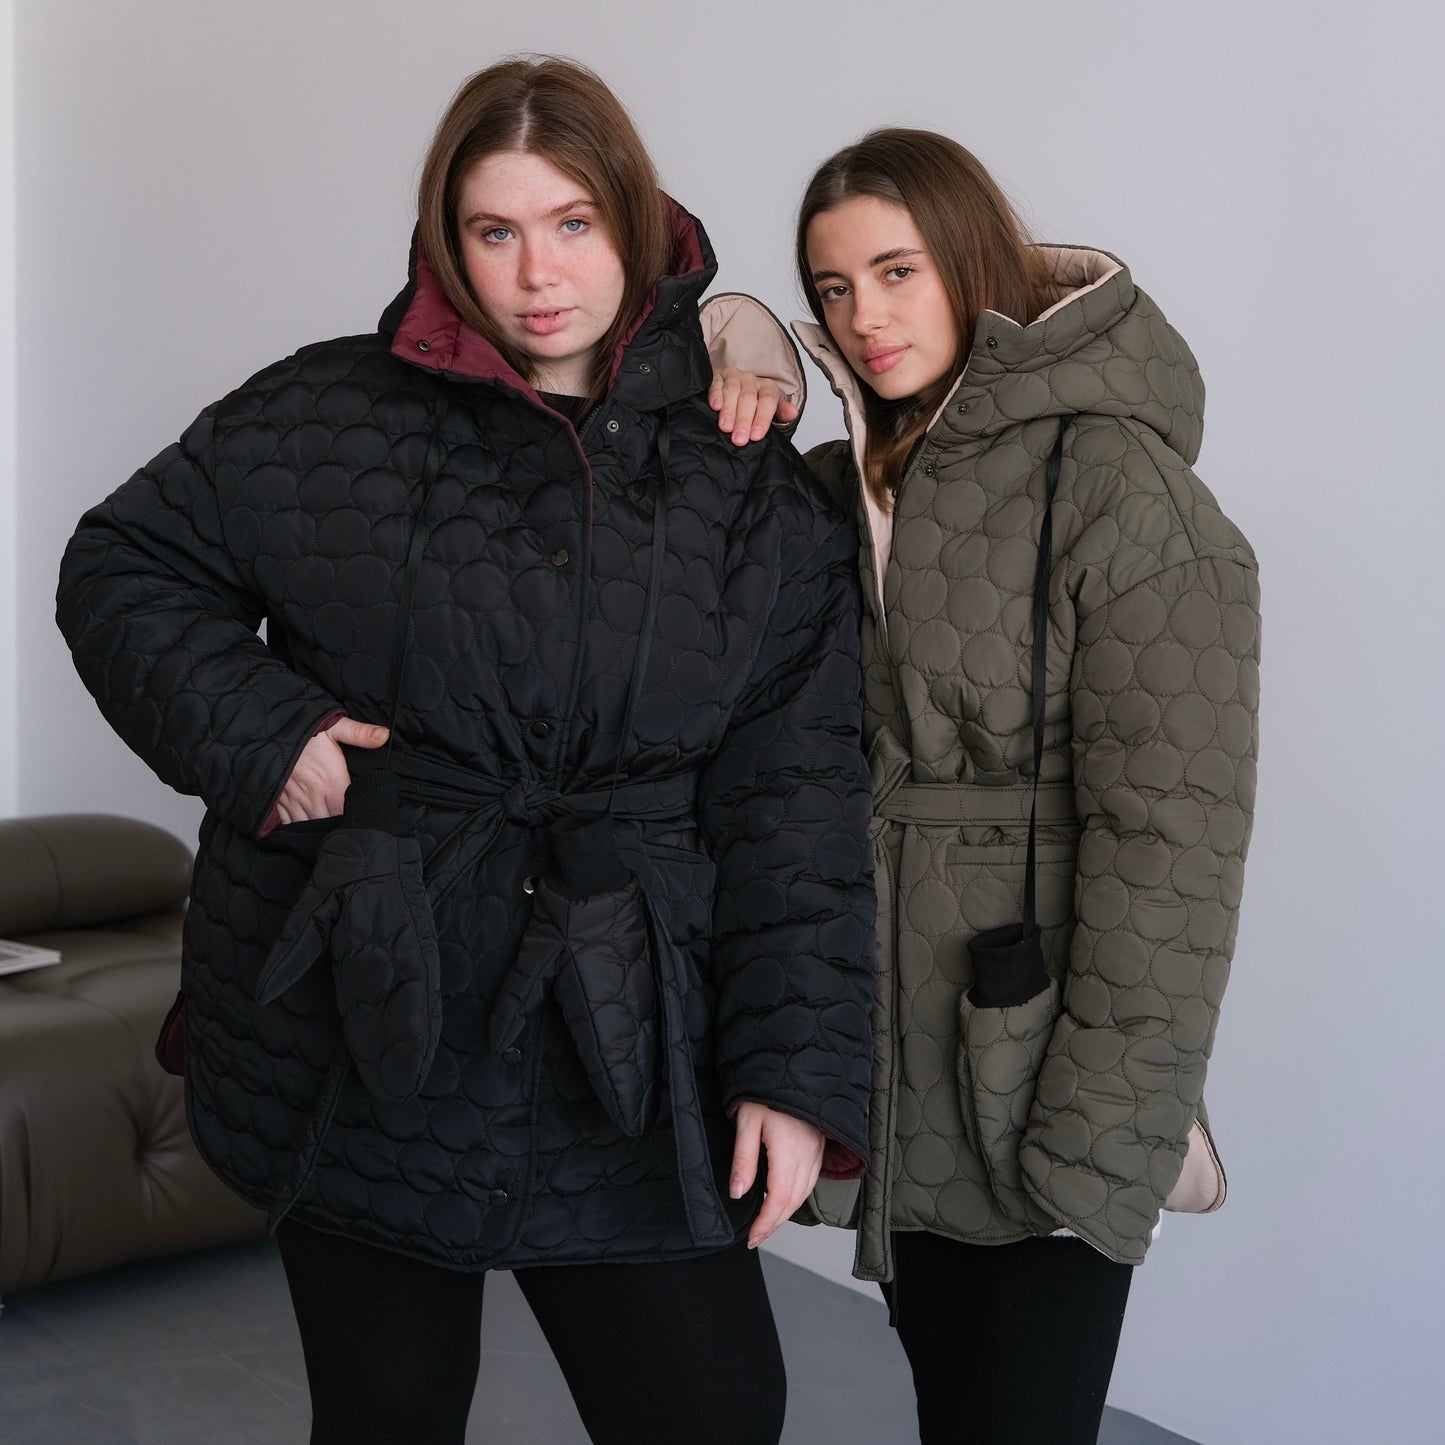 Winter double-sided jacket marsala/black